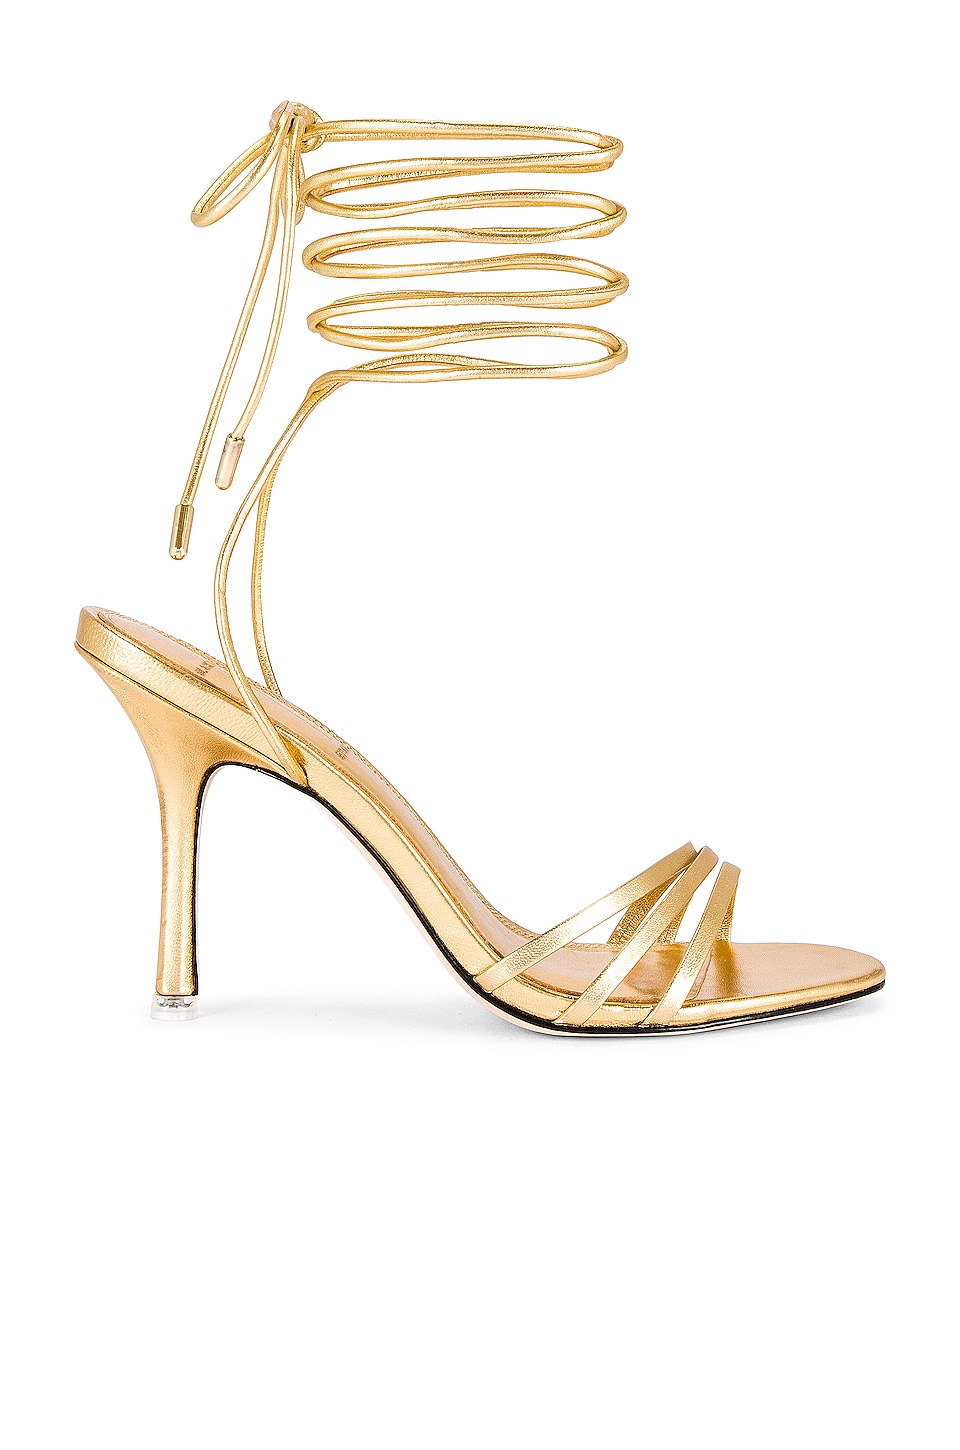 Michael Kors Imani Strappy Gold Heeled Sandal in Metallic | Lyst